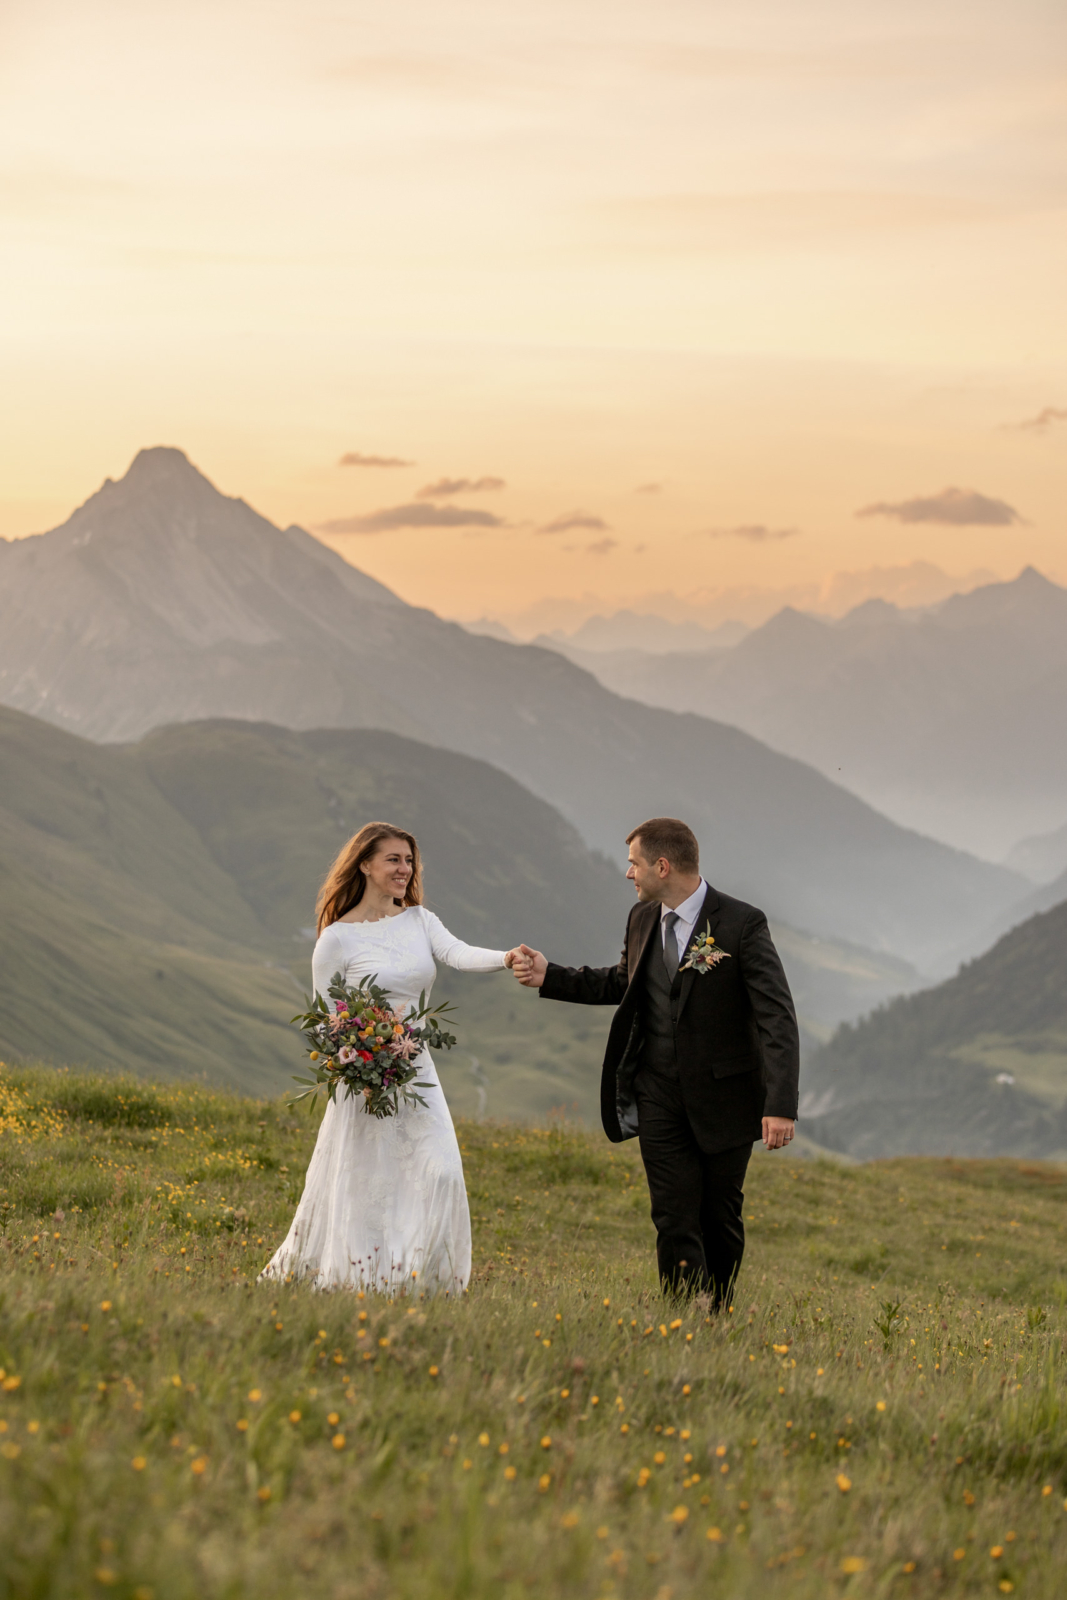 Wedding Photos in the Mountains in Austria